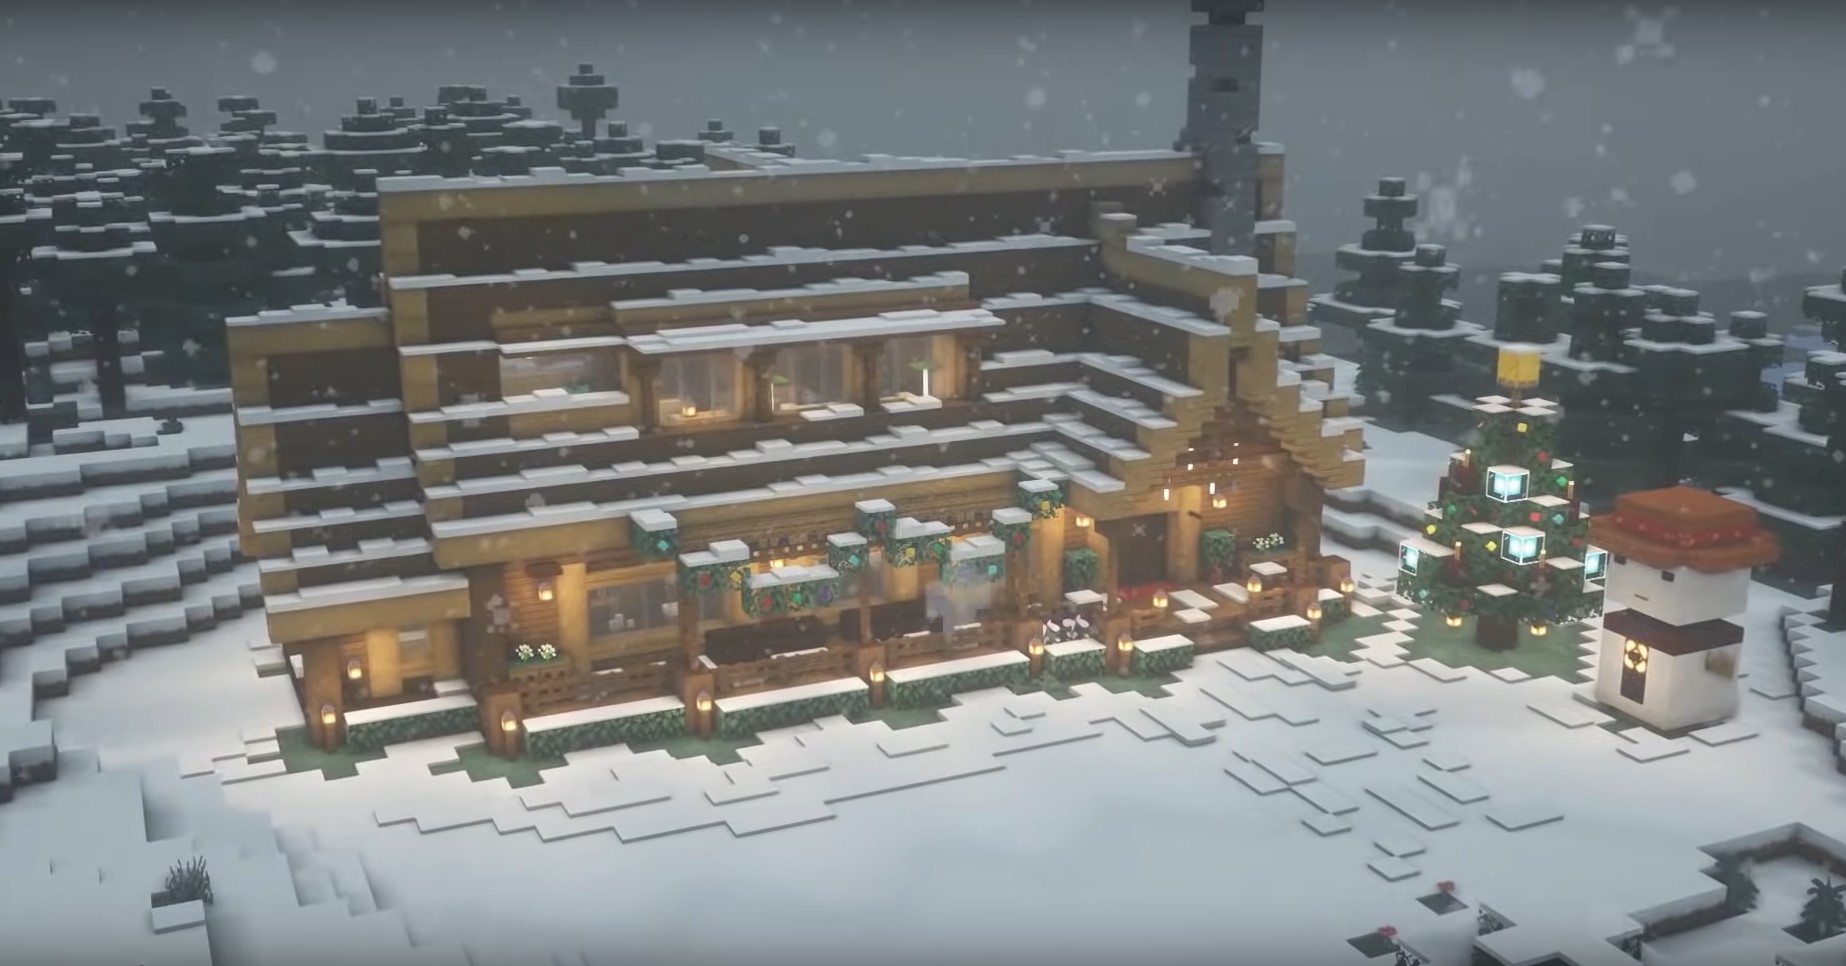 Winter Log Cabin minecraft building idea